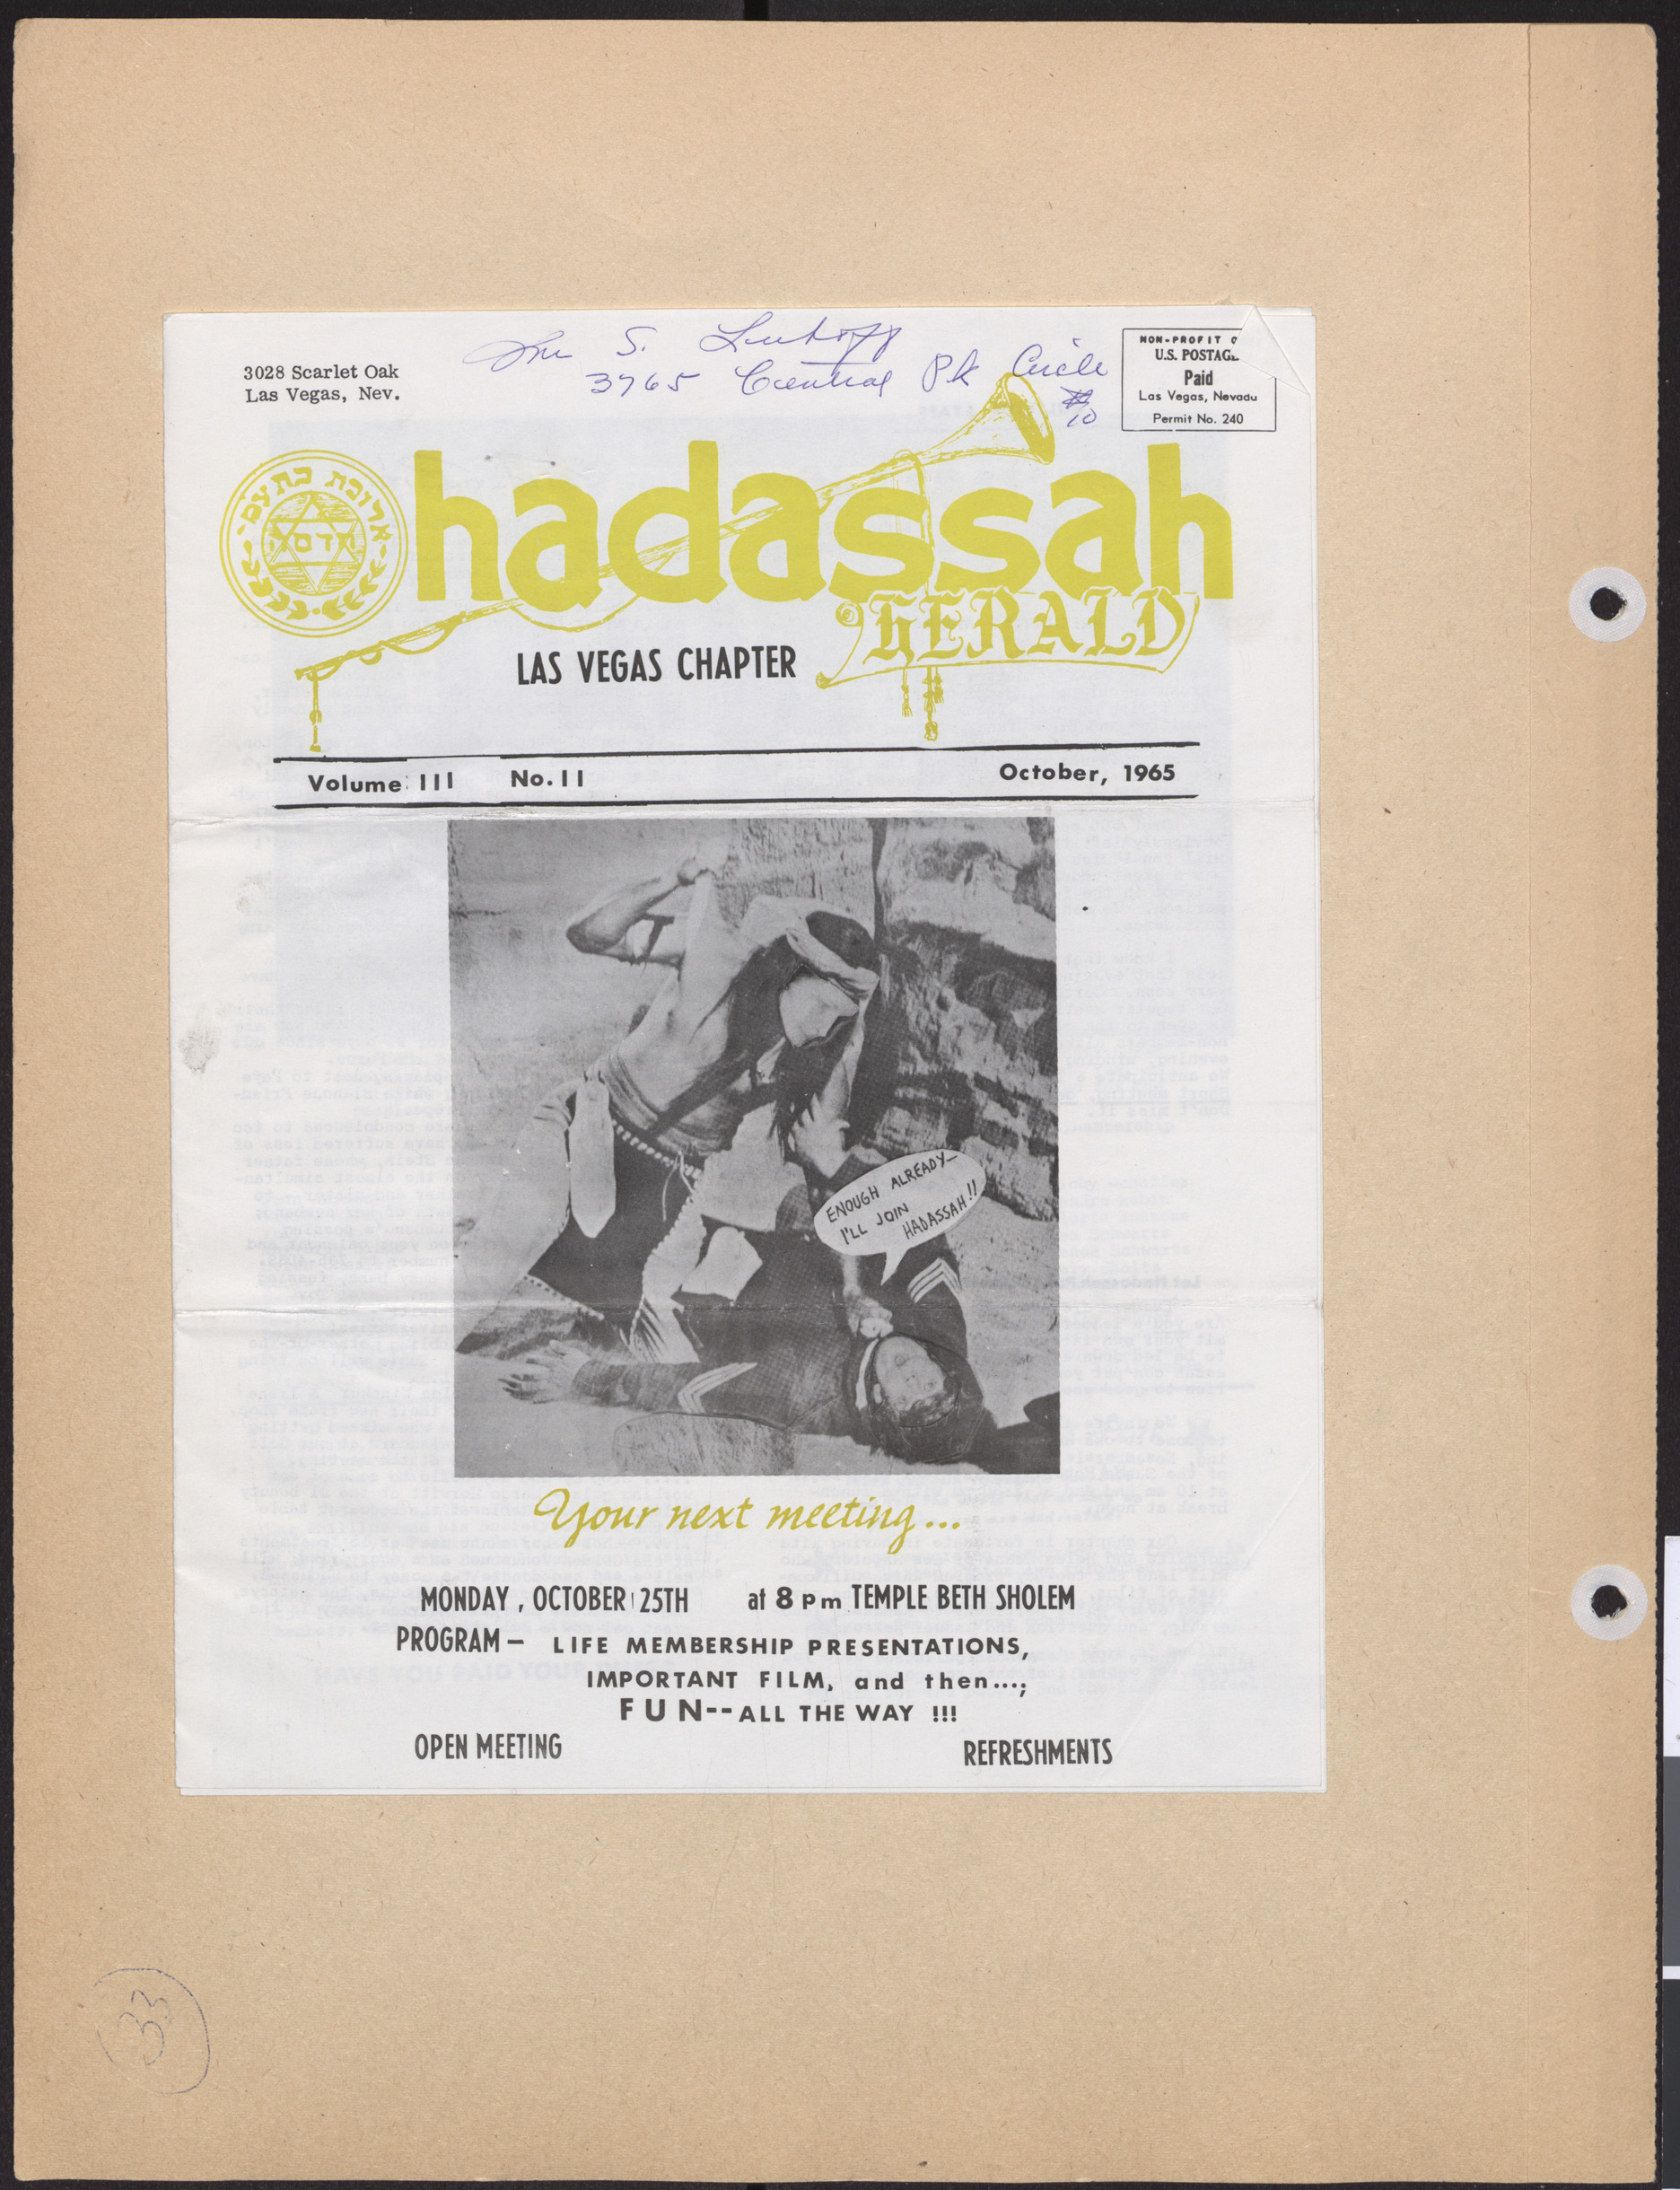 Hadassah Las Vegas Chapter newsletter, October 1965, cover